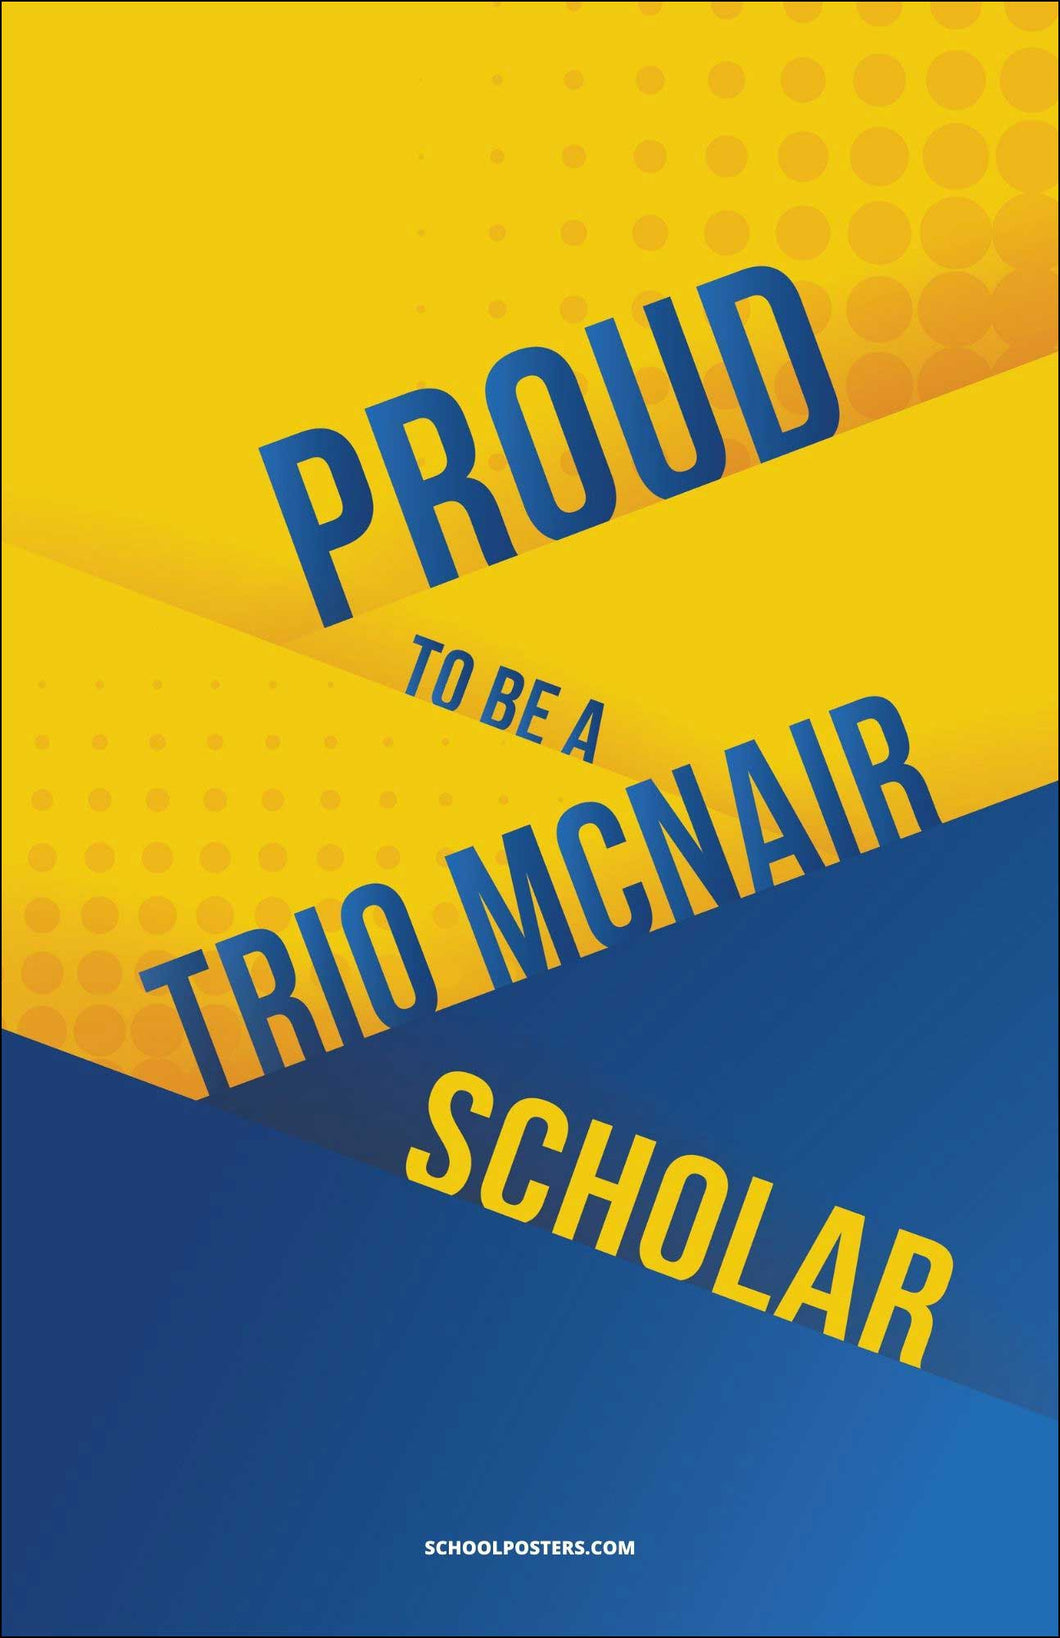 TRIO McNair Scholar Poster